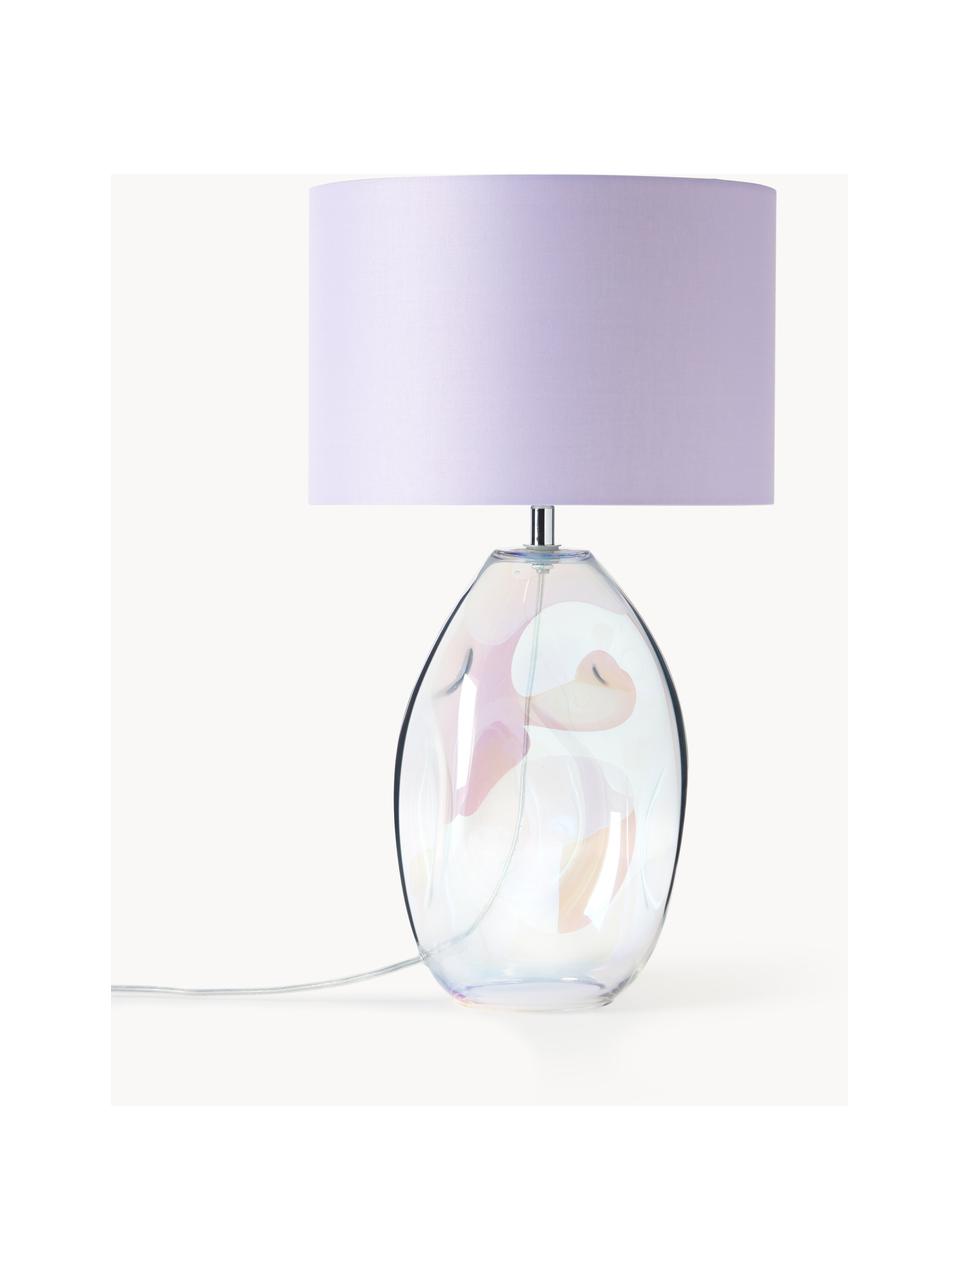 Lámpara de mesa grande de vidrio iridiscente Leia, Pantalla: tela, Cable: cubierto en tela, Lila, transparente iridiscente, Ø 30 x Al 53 cm